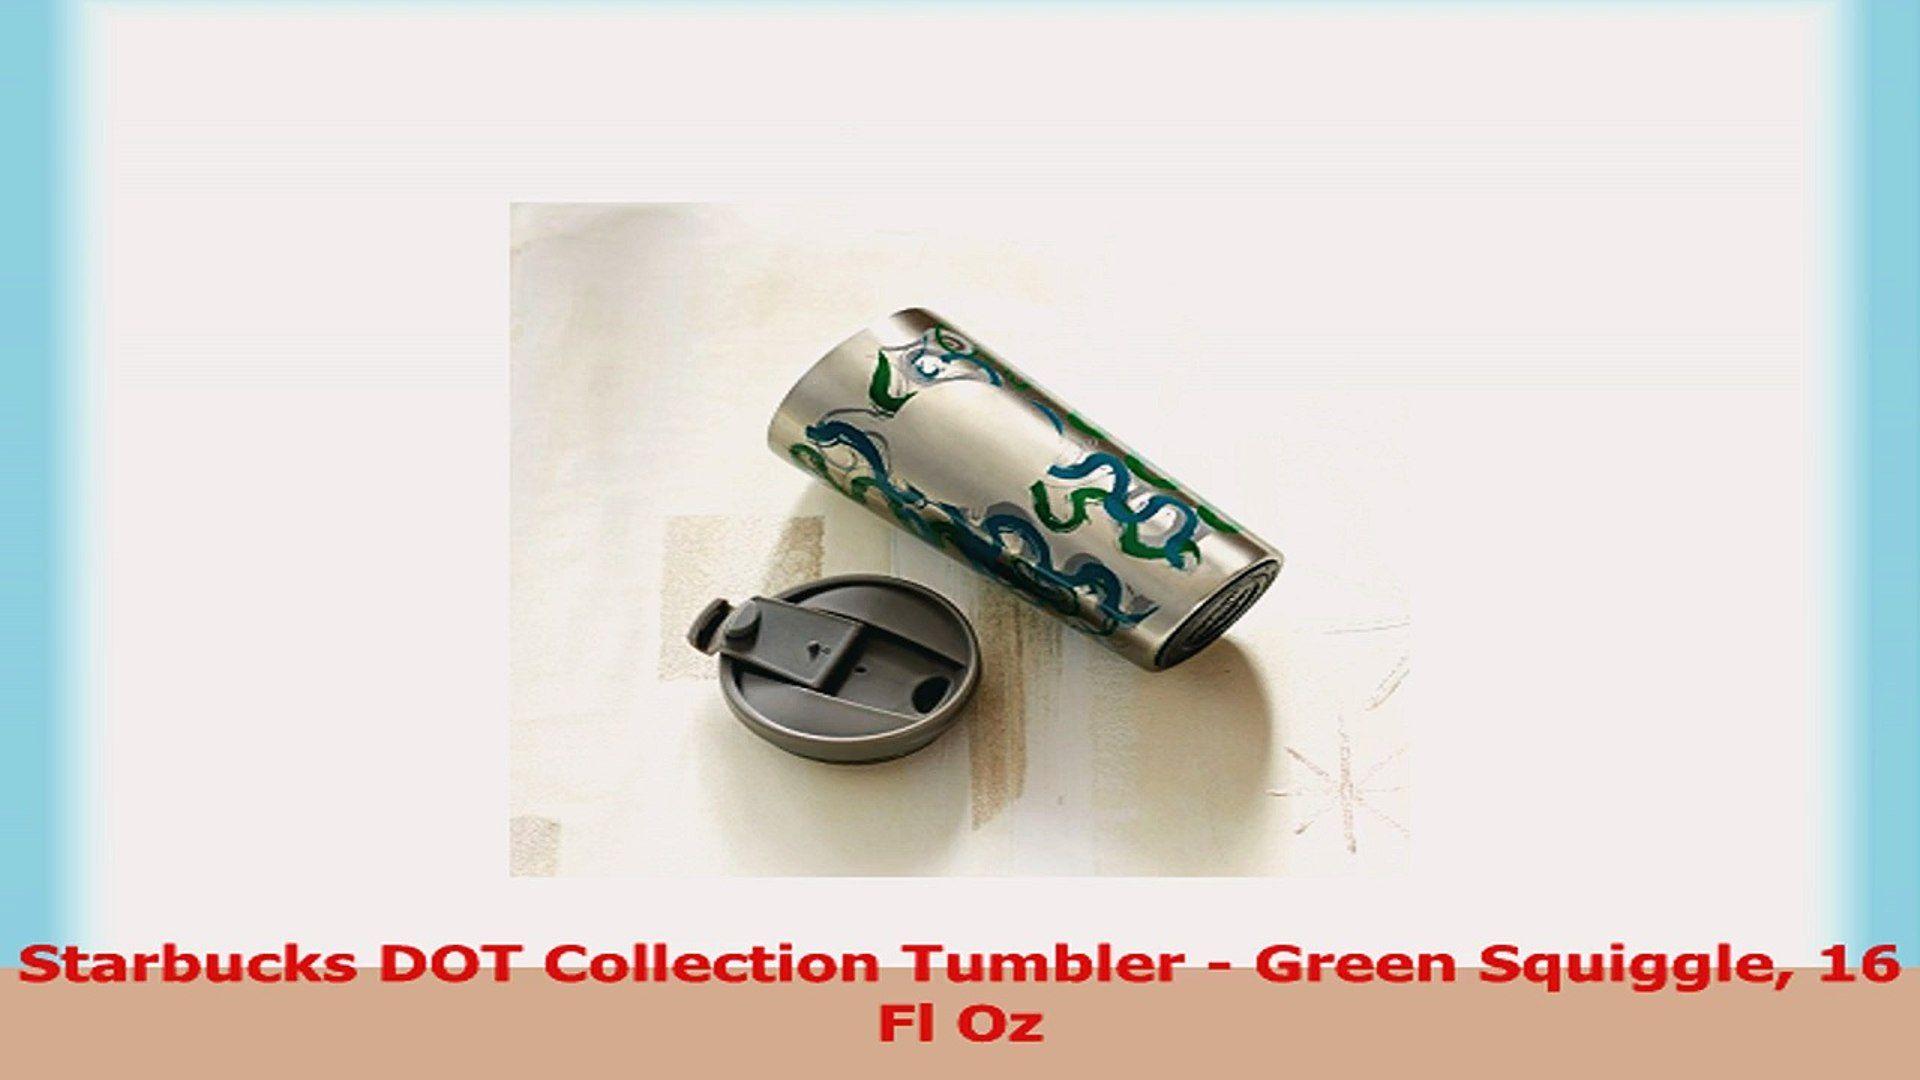 Green Squiggle Logo - Starbucks DOT Collection Tumbler Green Squiggle 16 Fl Oz 89d885c1 ...